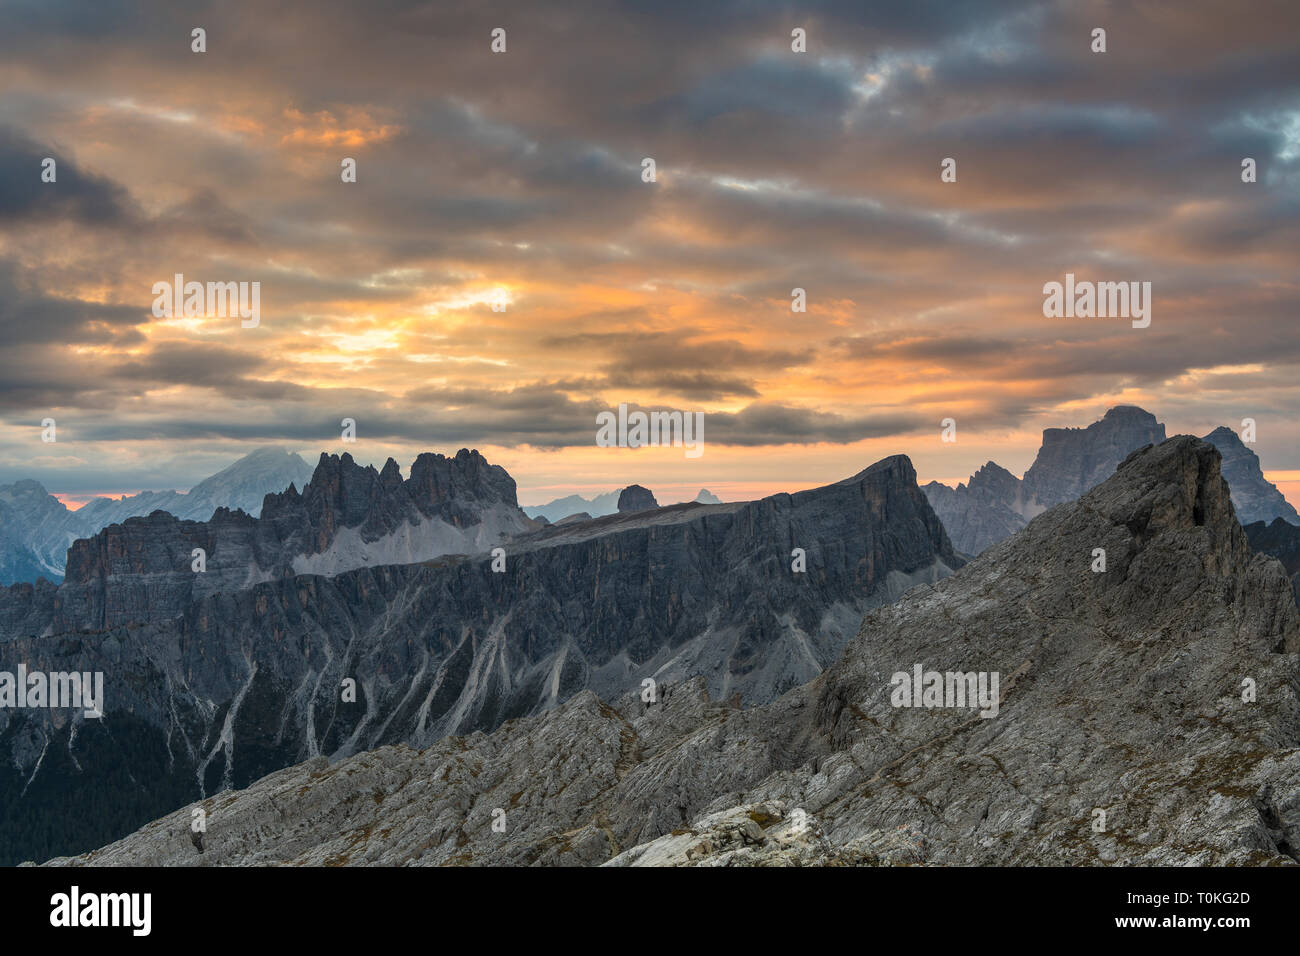 Sunrise in the Dolomites at Rifugio Nuvolau overlooking Croda da Lago, Italy Stock Photo